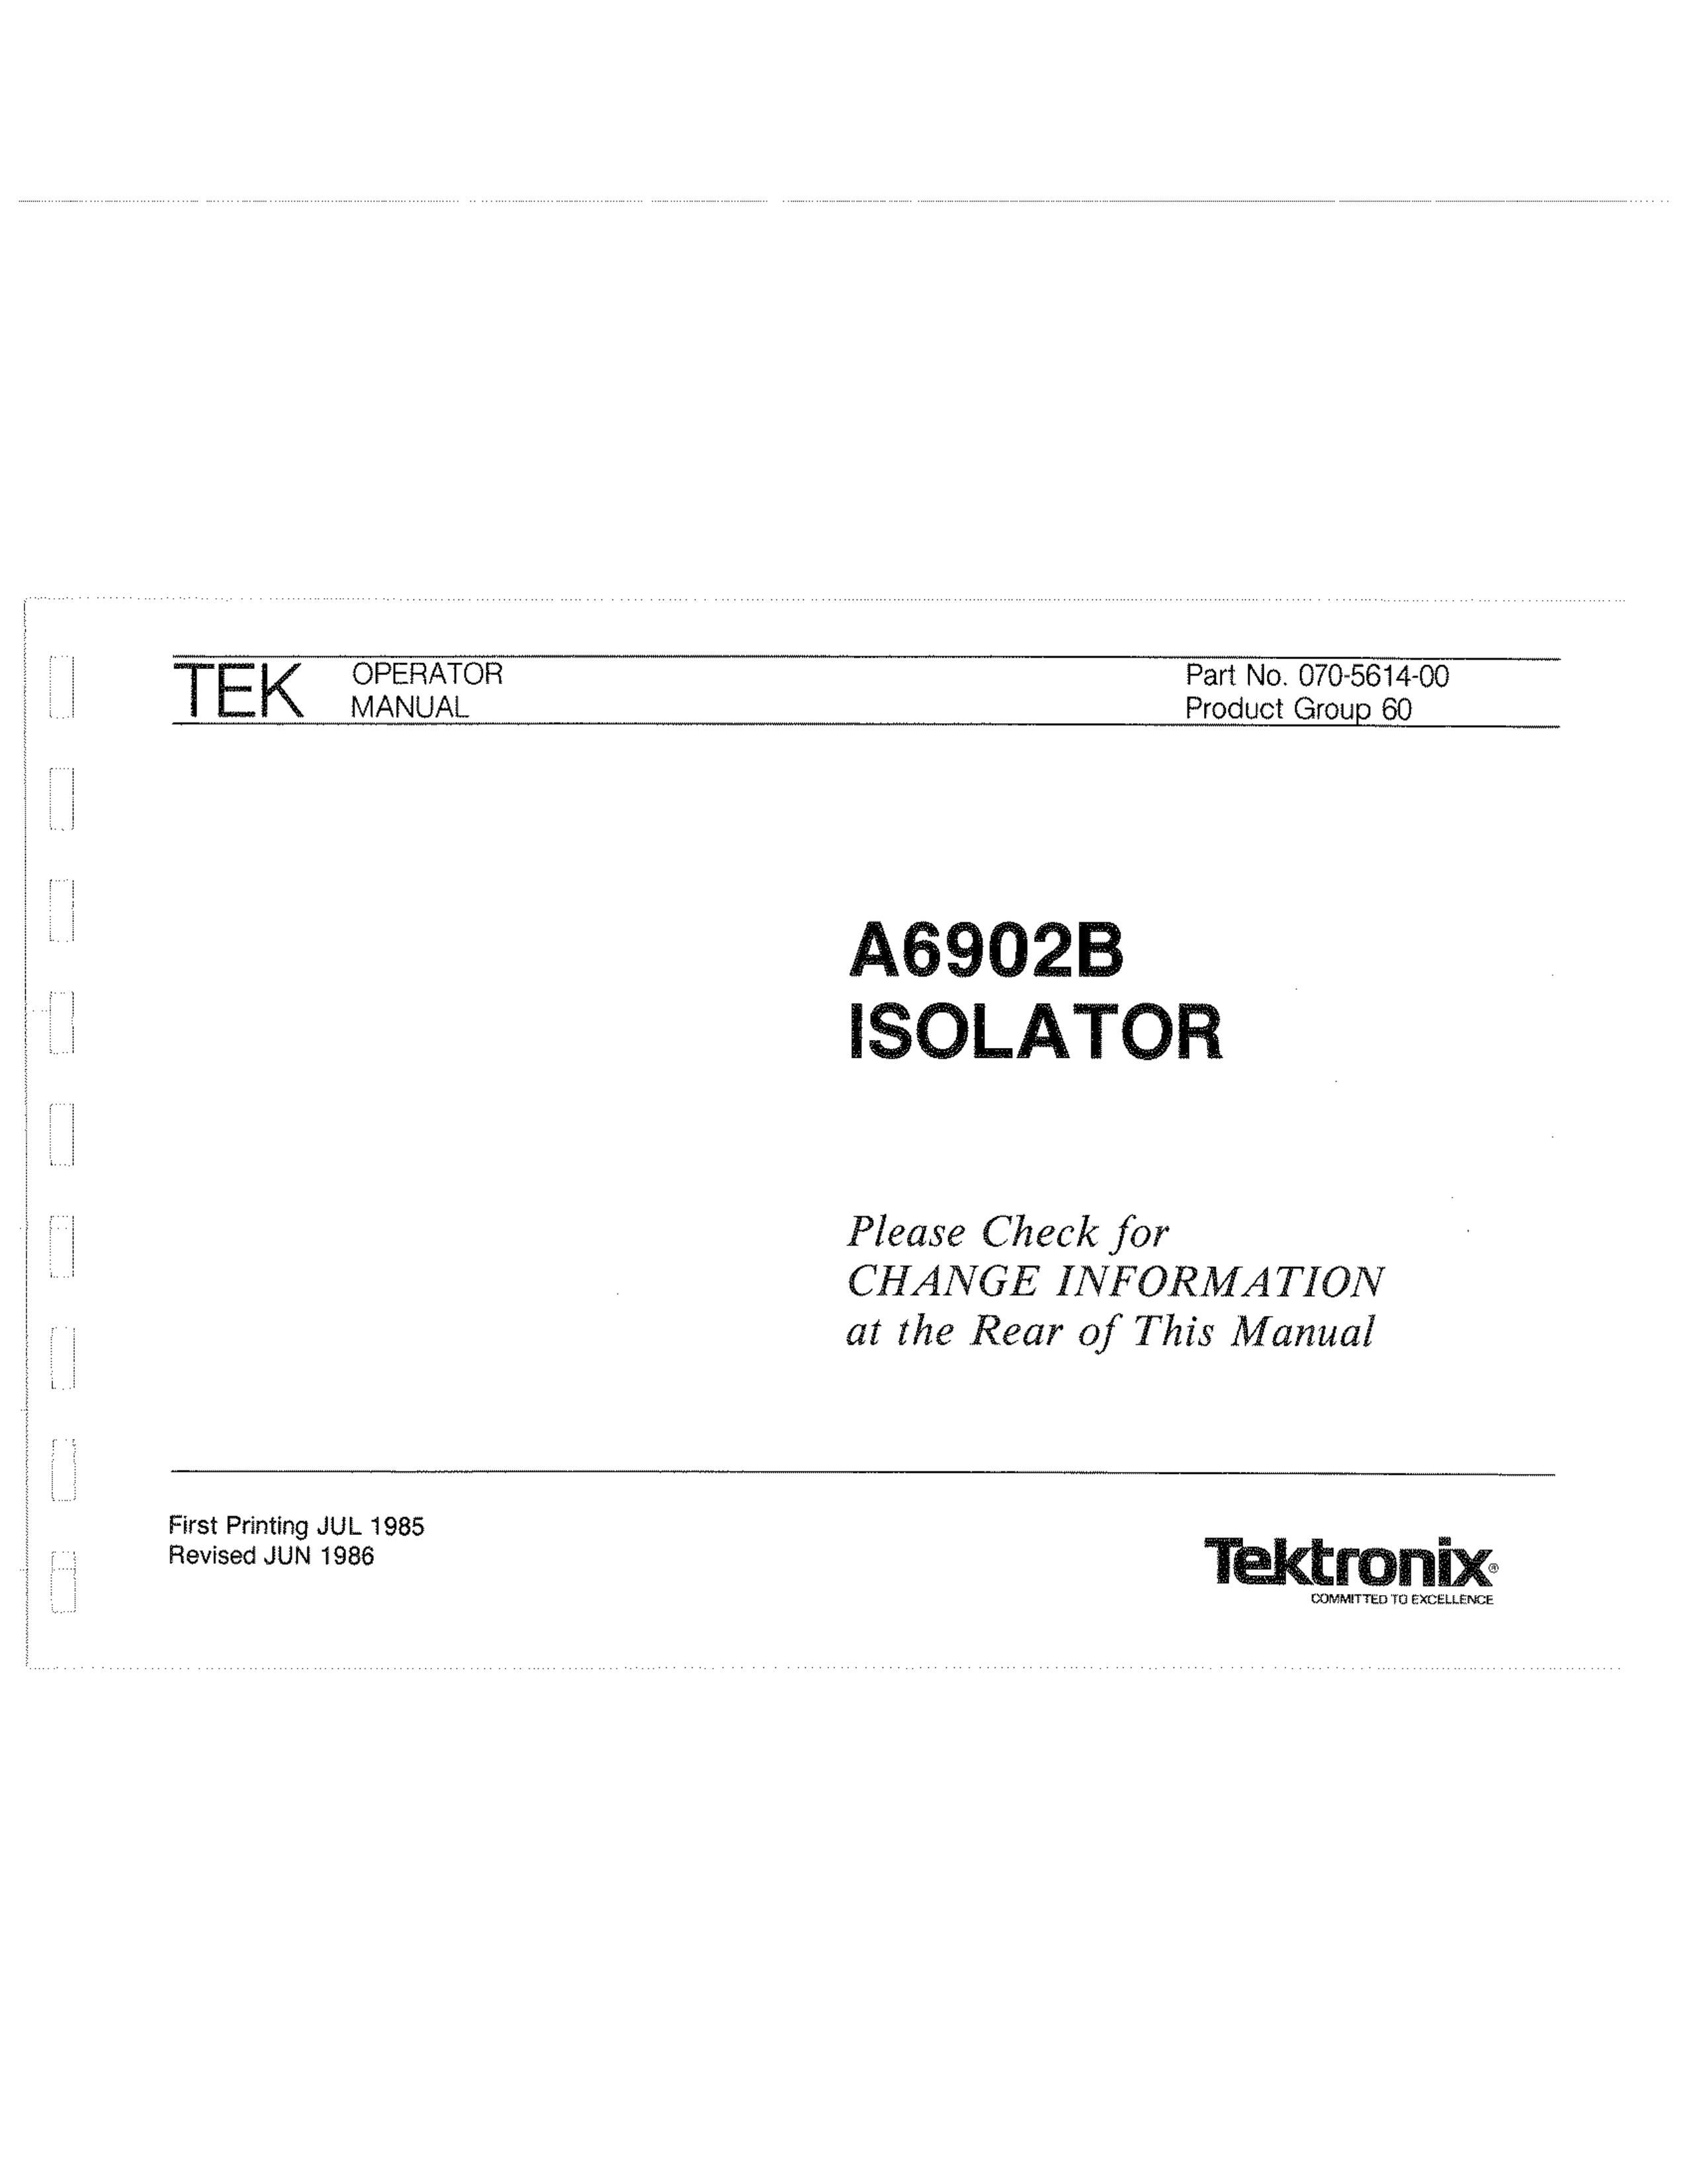 Tektronix A6902B Waterskis User Manual